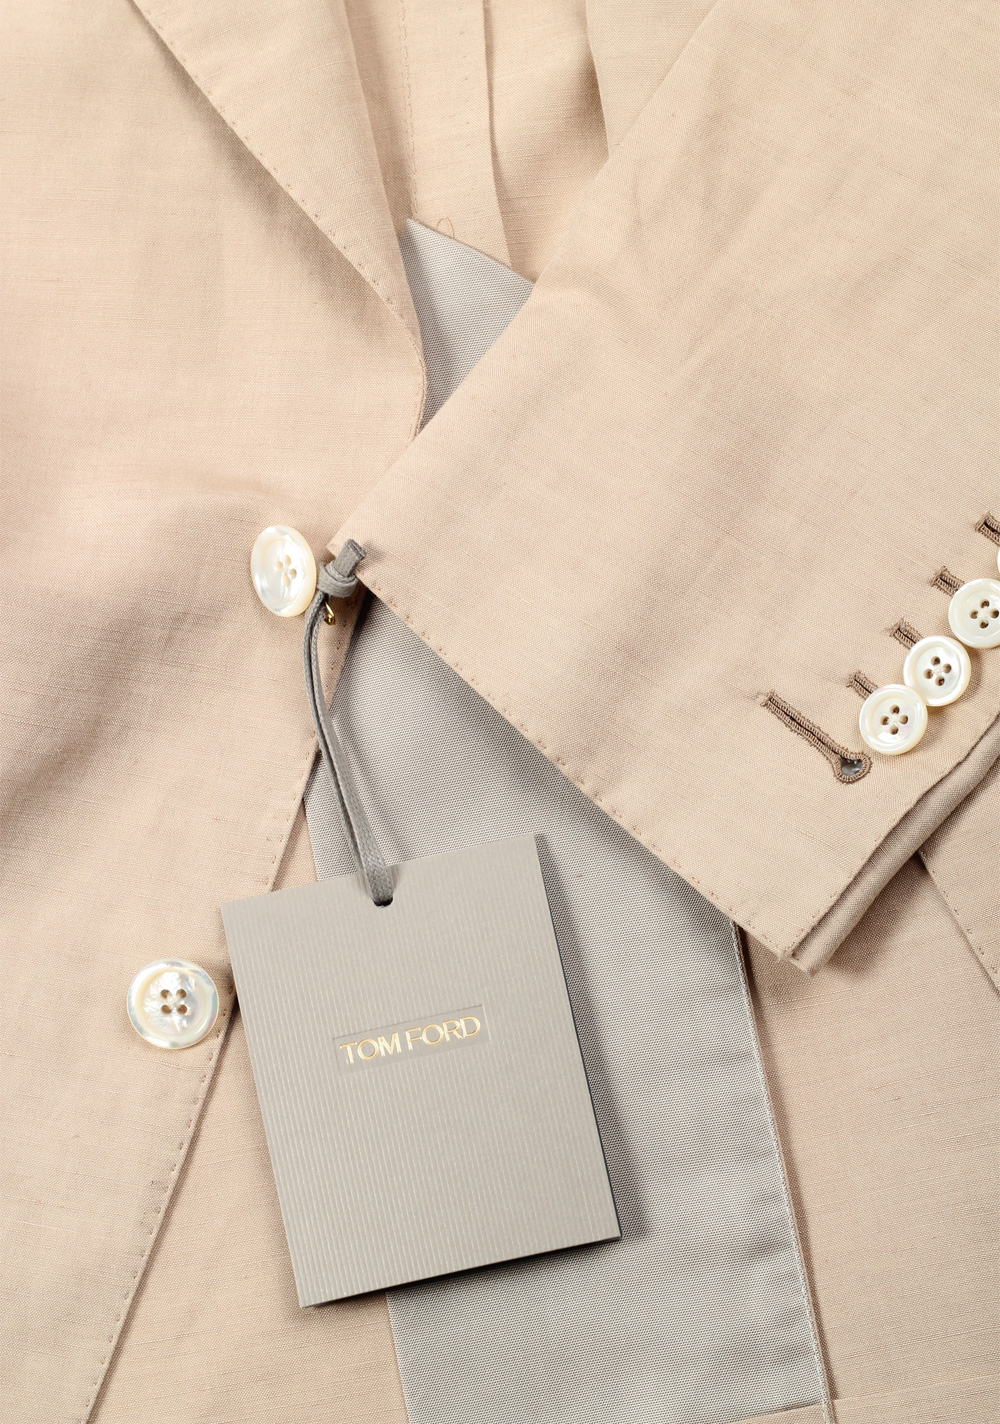 TOM FORD Shelton Beige Suit Size 48 / 38R U.S. In Linen Silk | Costume Limité